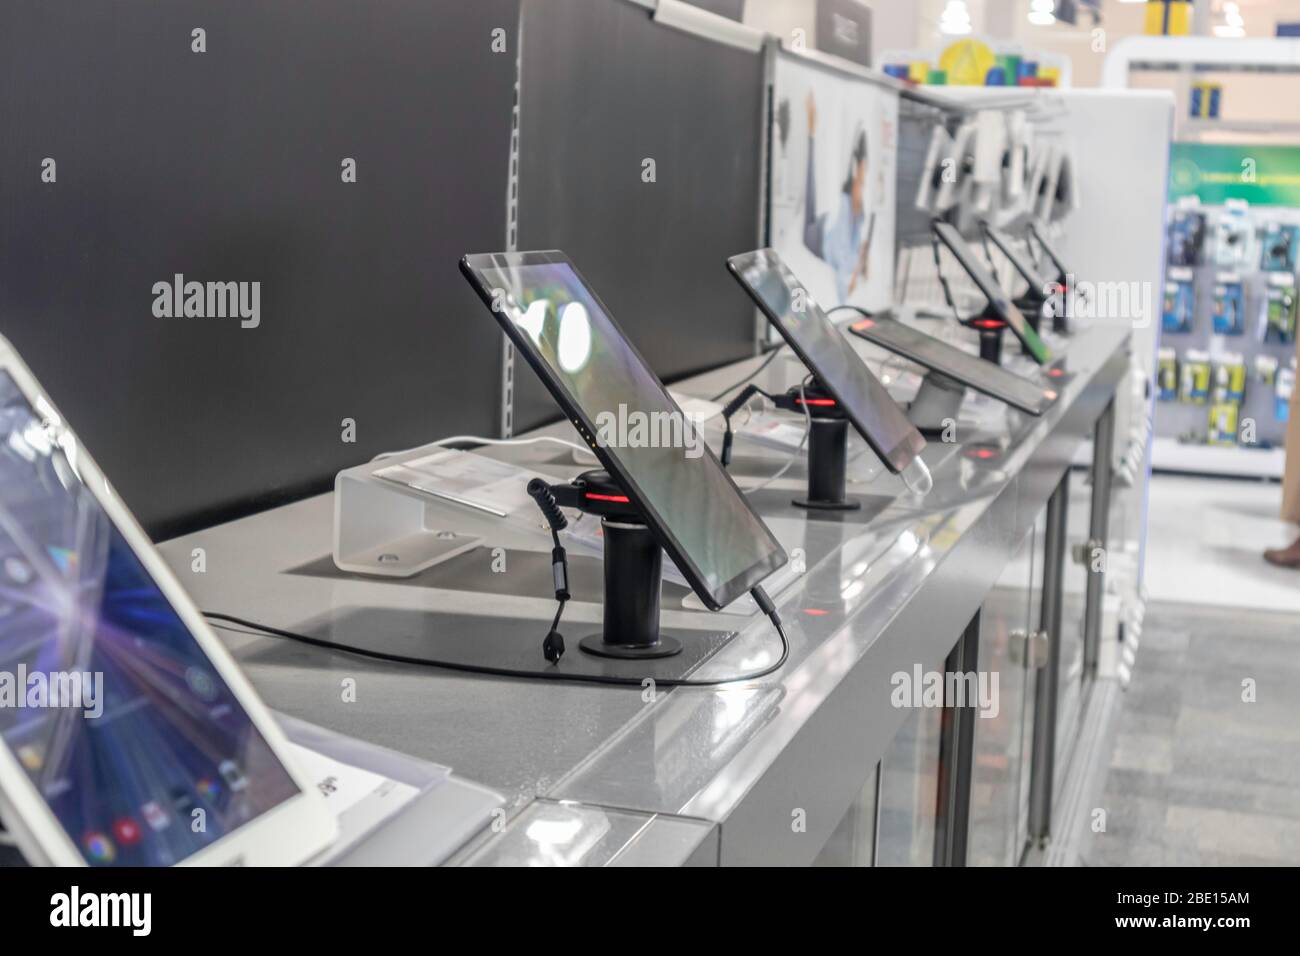 Dezember 22 2019 - Calgary , Alberta Kanada - Tablets auf Dsiplay im Elektronikgeschäft Best Buy Stockfoto